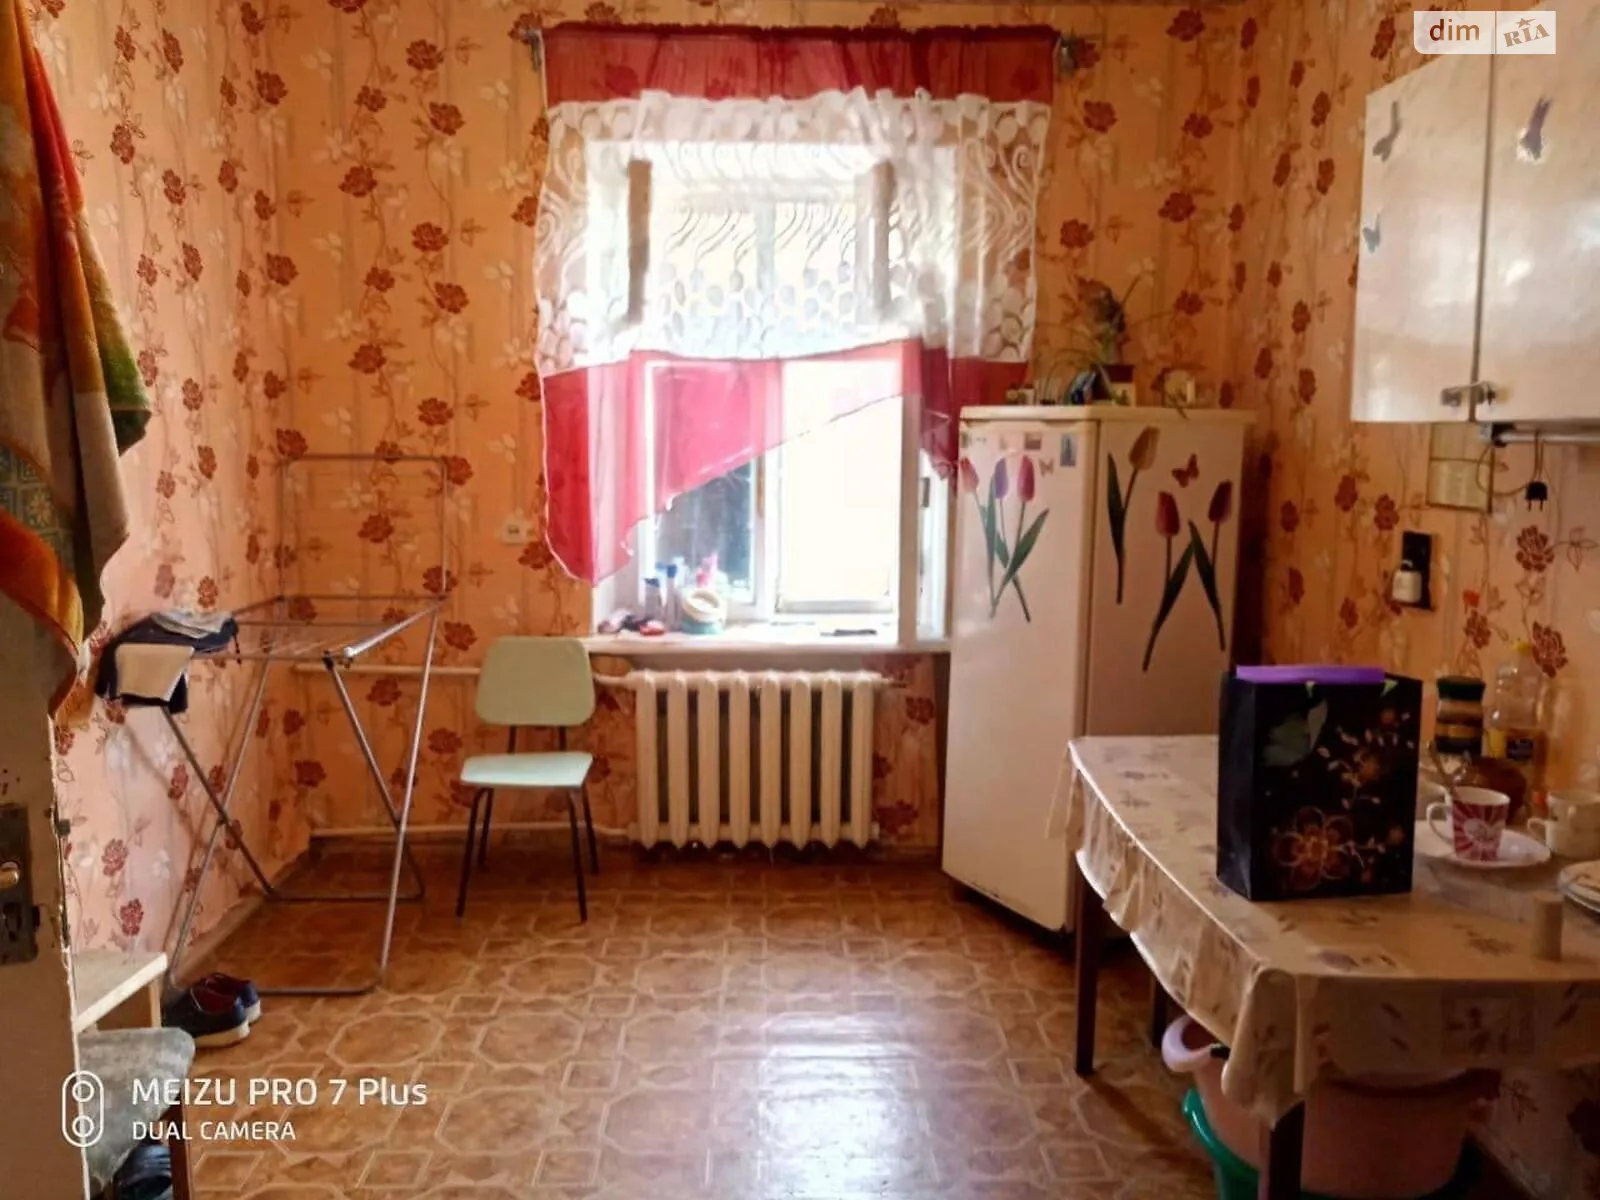 Продается комната 30 кв. м в Одессе, цена: 8000 $ - фото 1